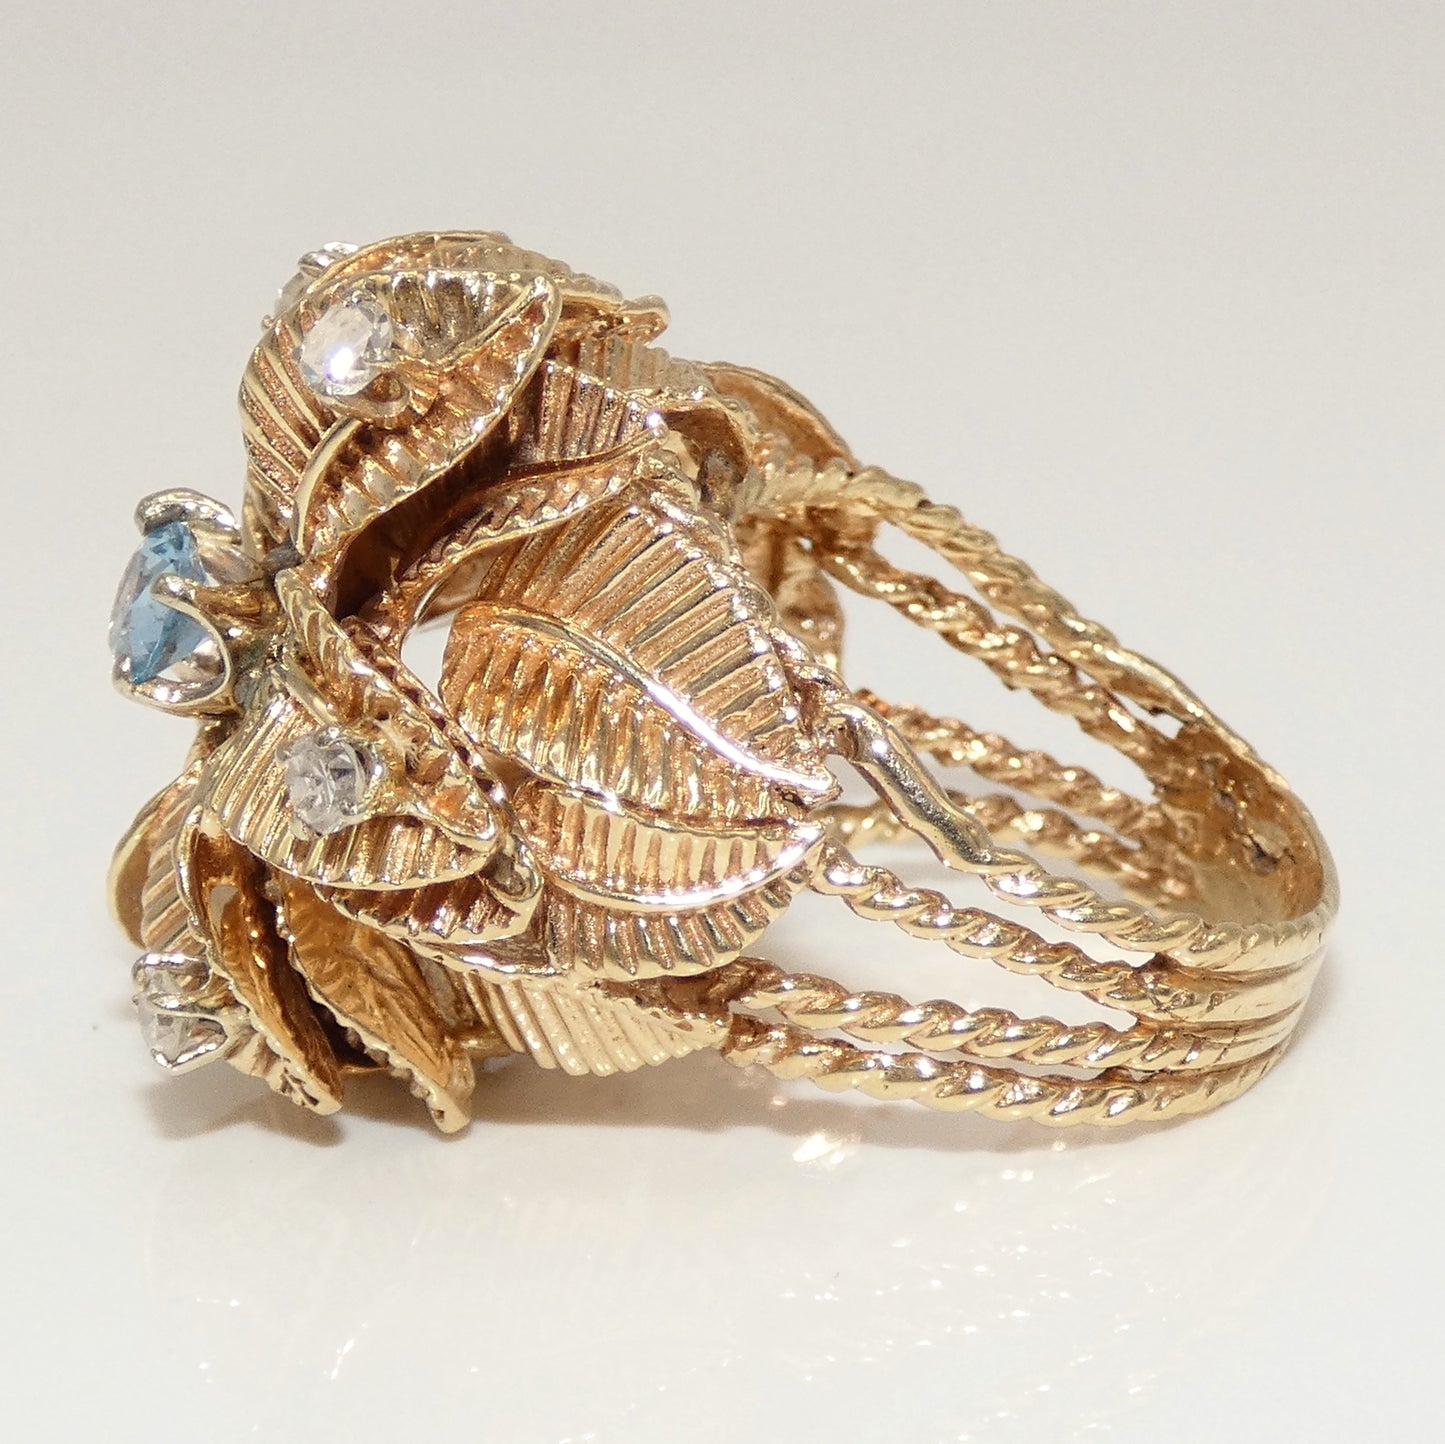 14K Gold Custom Flower Ring with Diamonds & Aquamarine